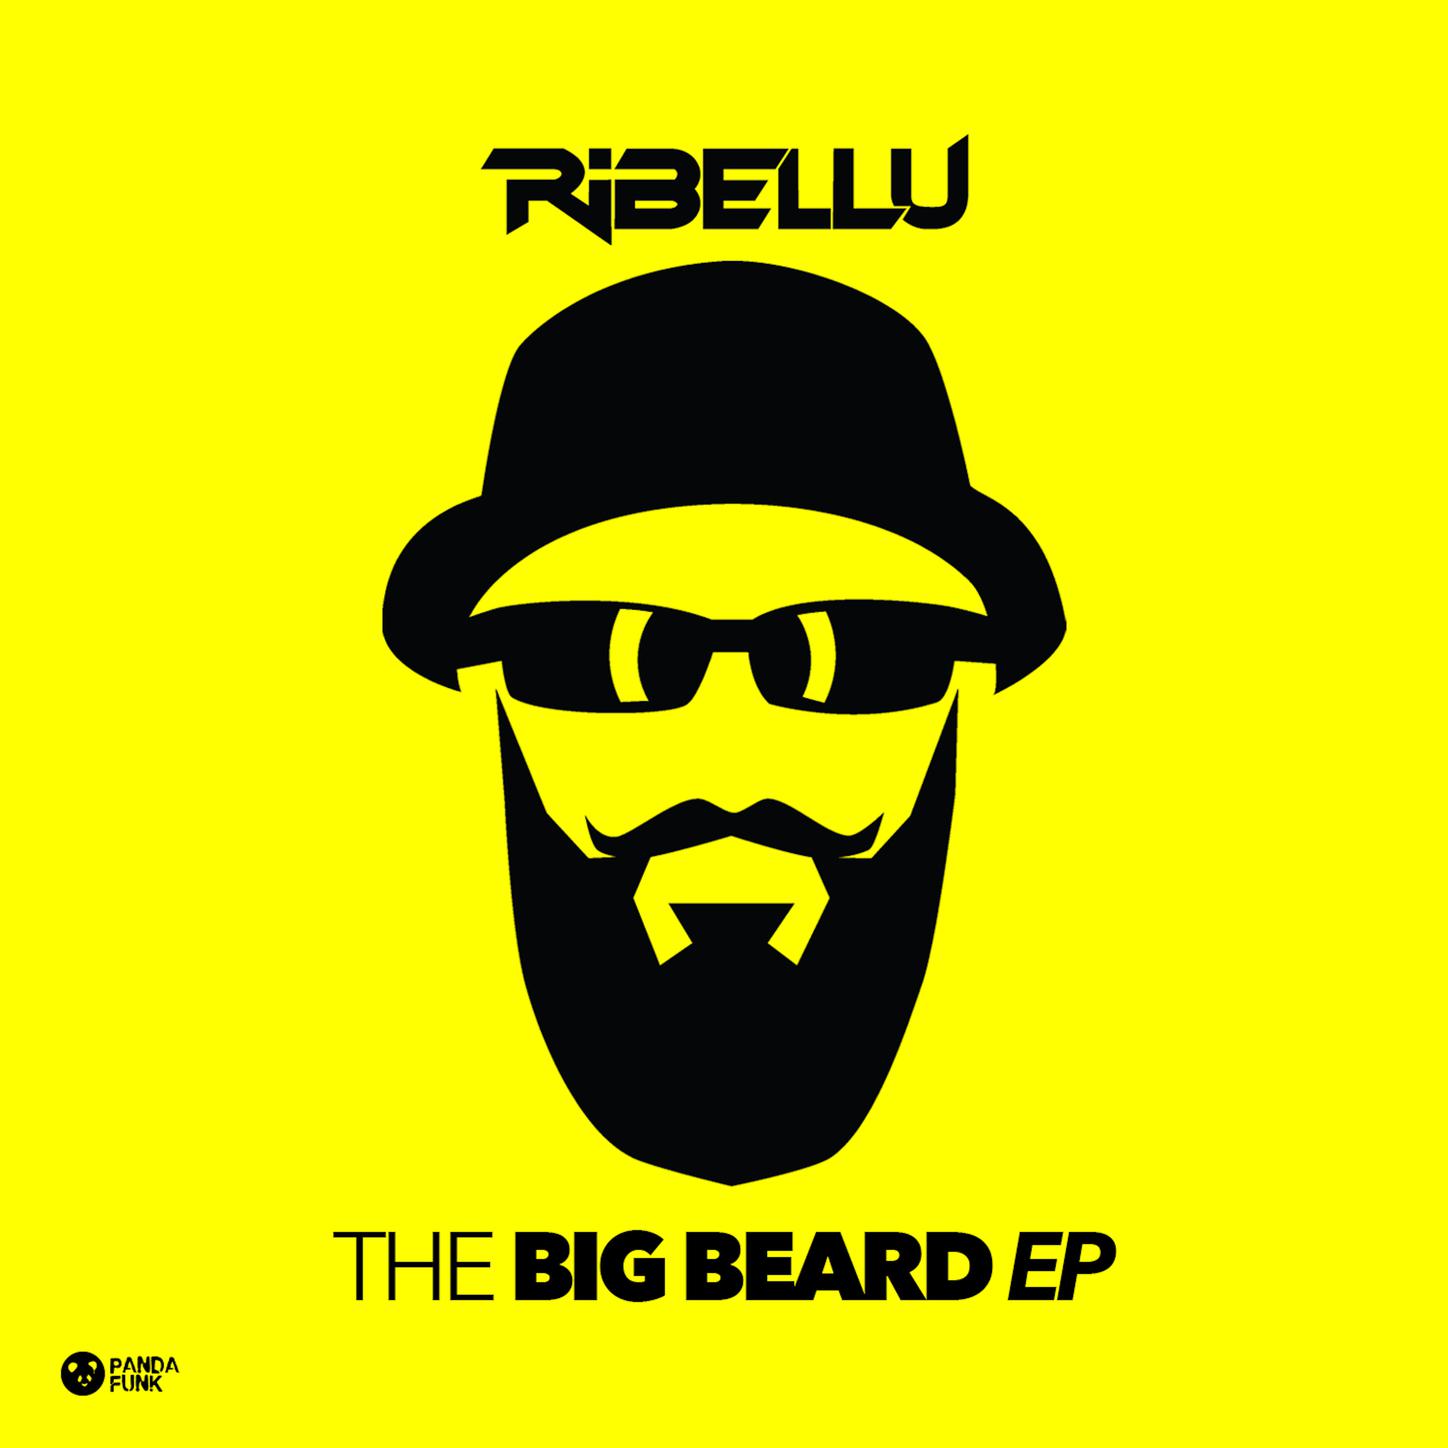 The Big Beard EP